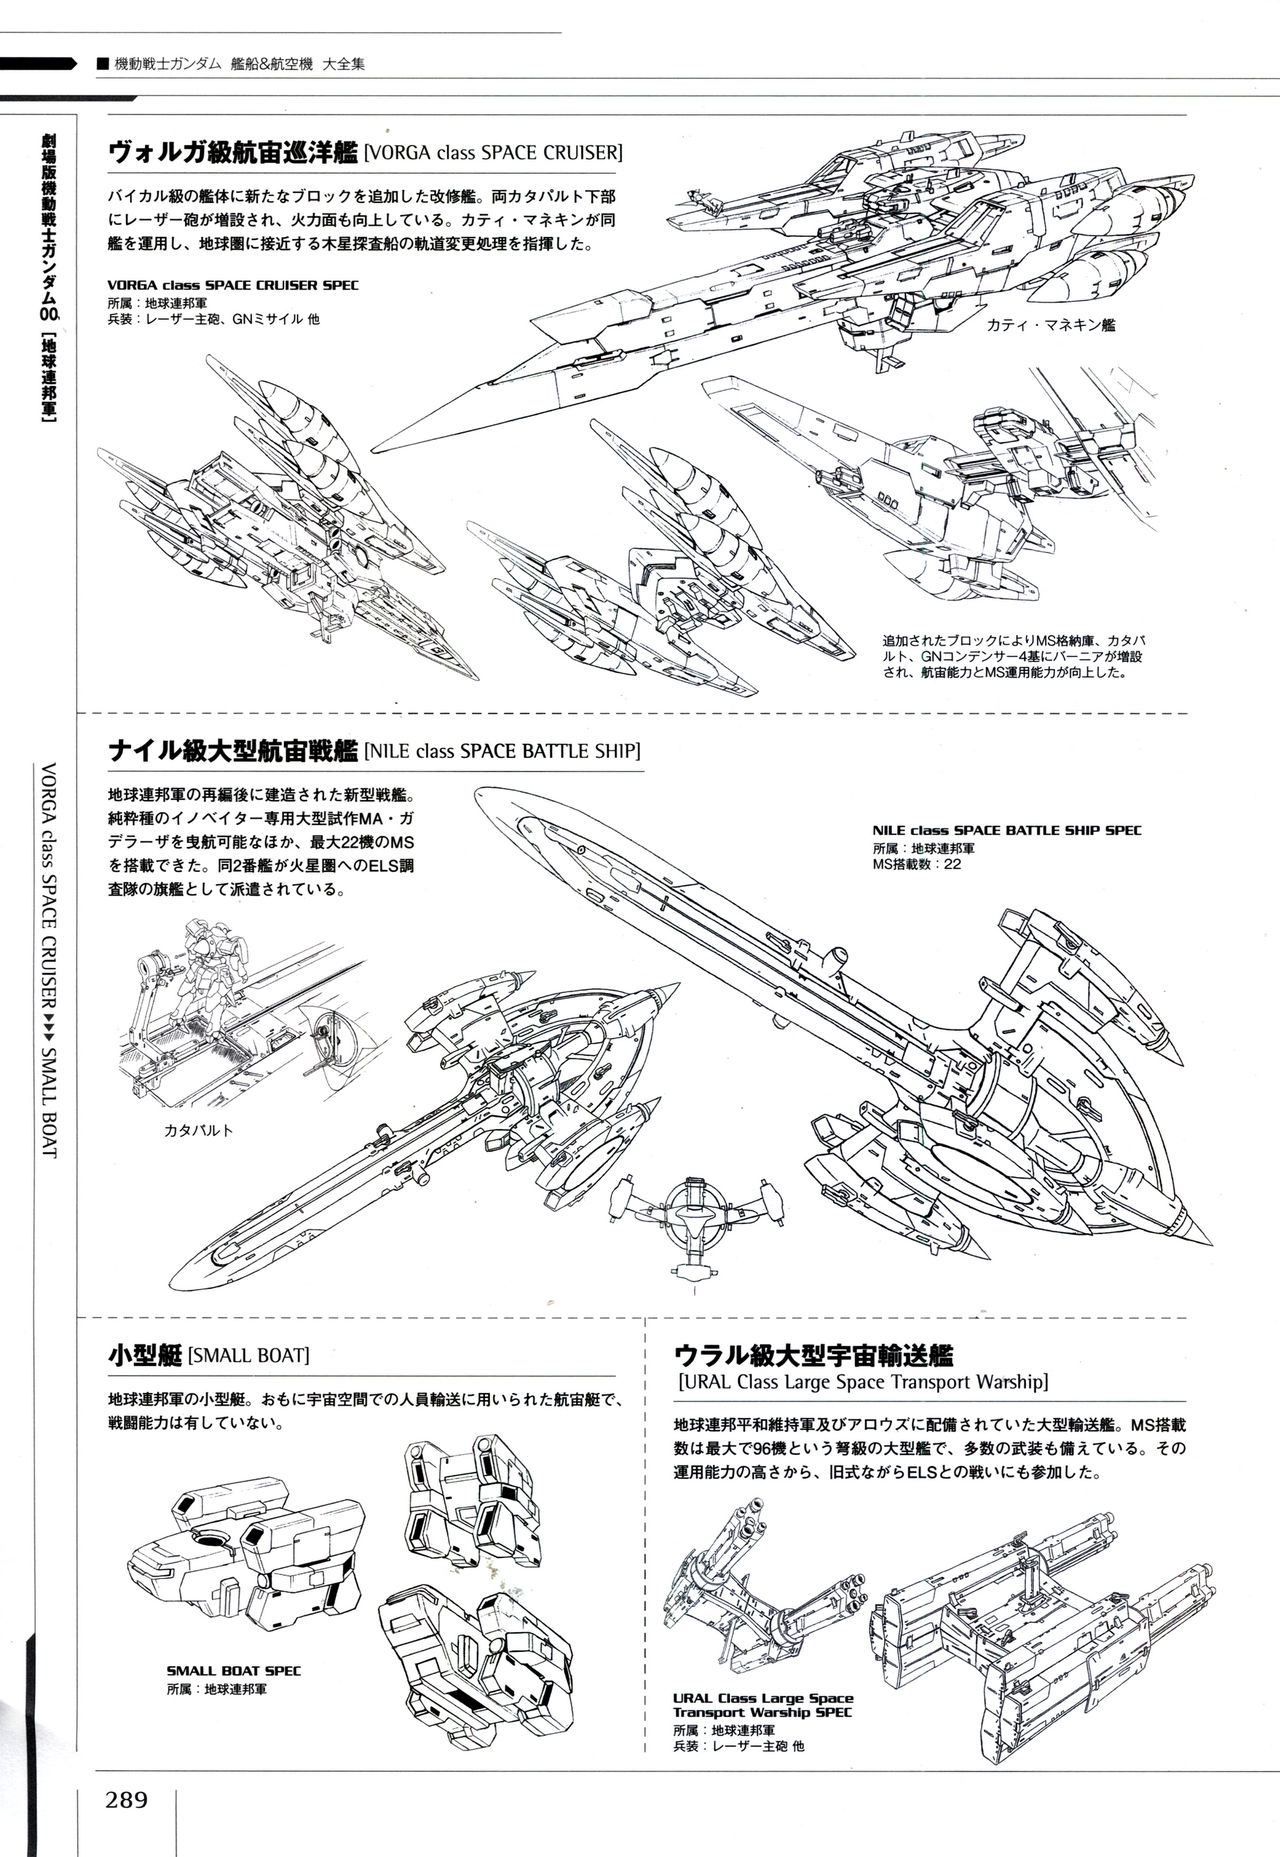 Mobile Suit Gundam - Ship & Aerospace Plane Encyclopedia - Revised Edition 294